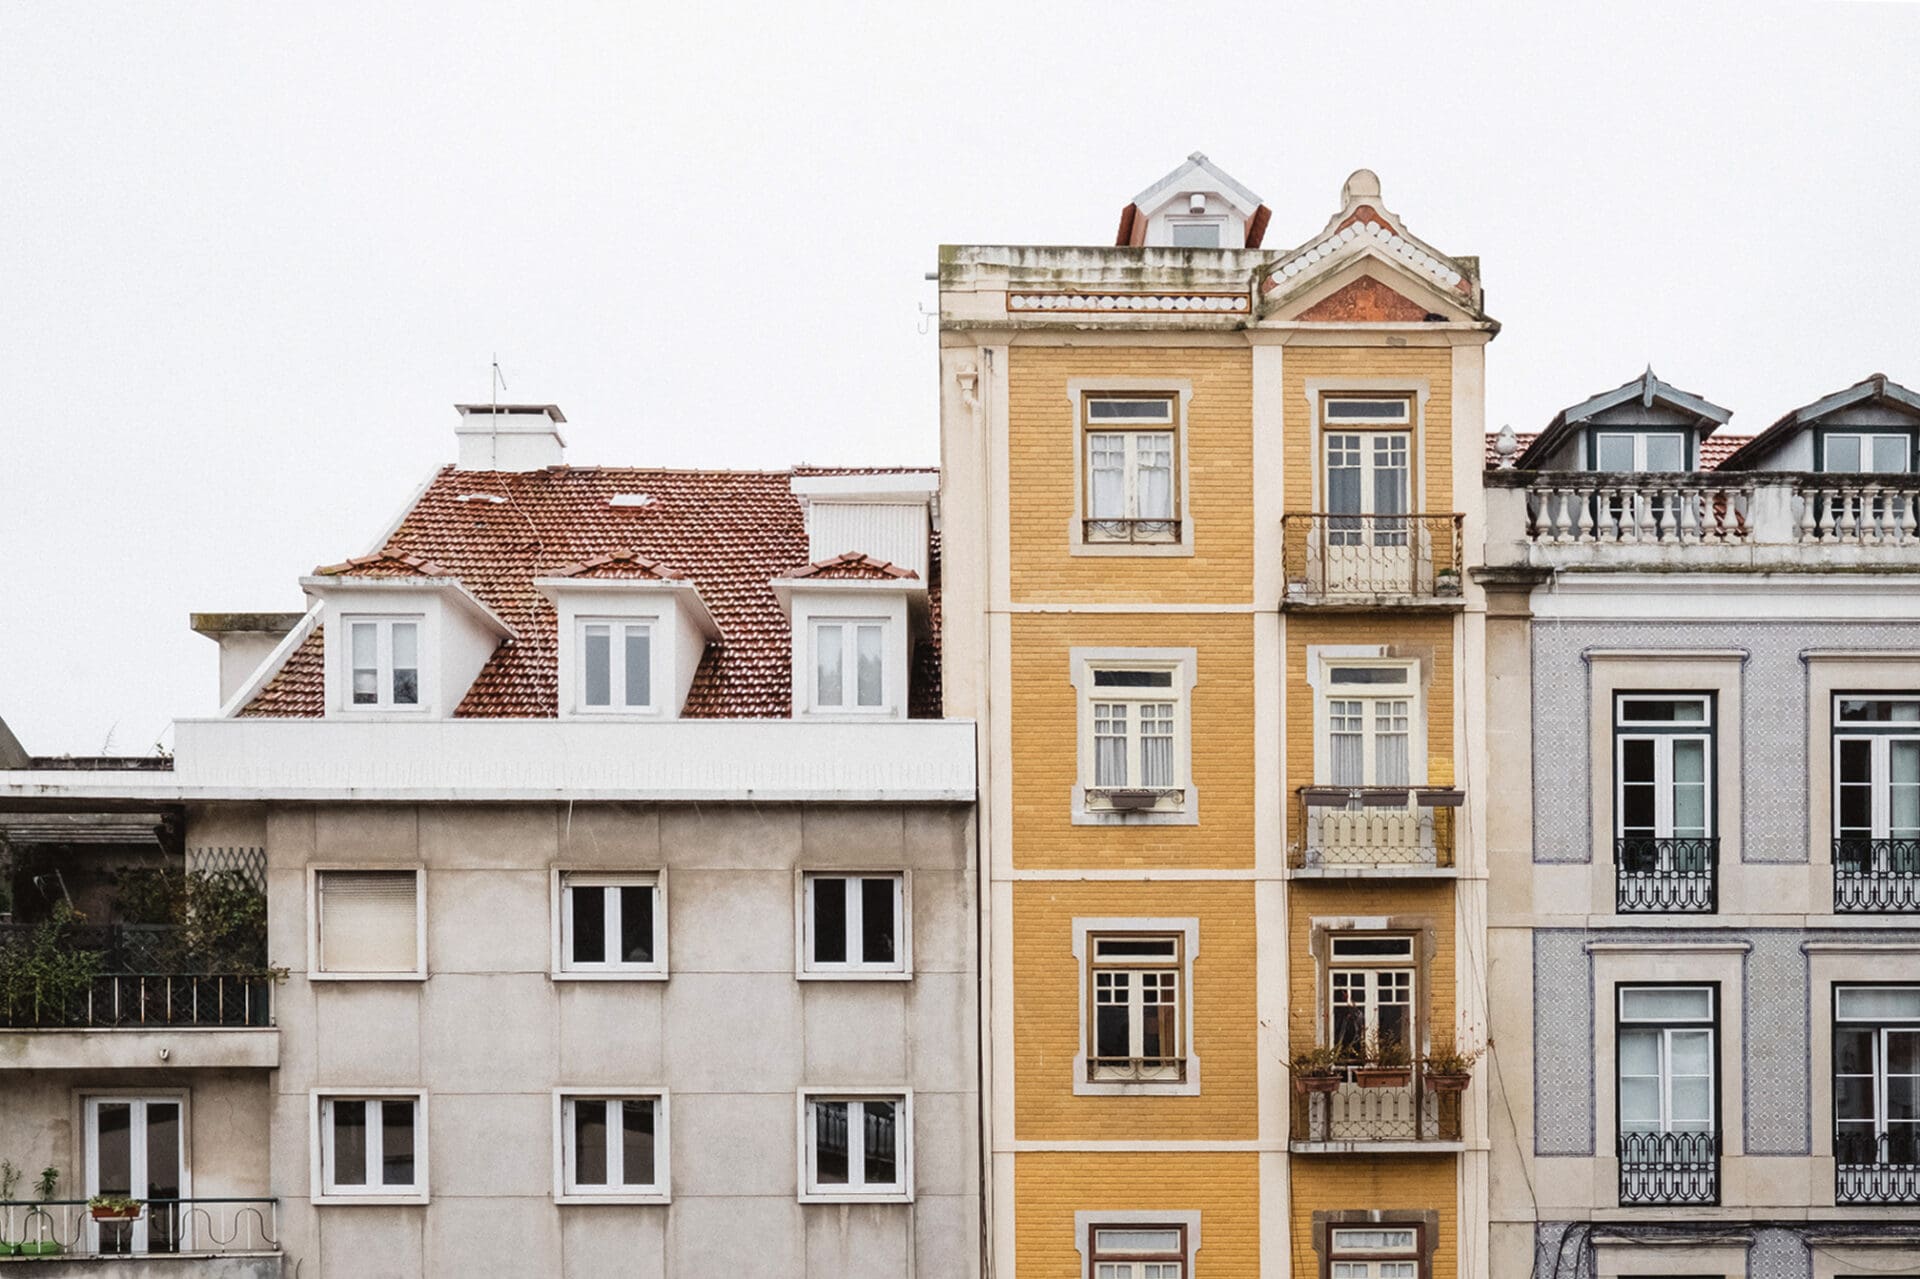 Buildings in Lisbon taken on a Fuji camera by photographer Emma Croman